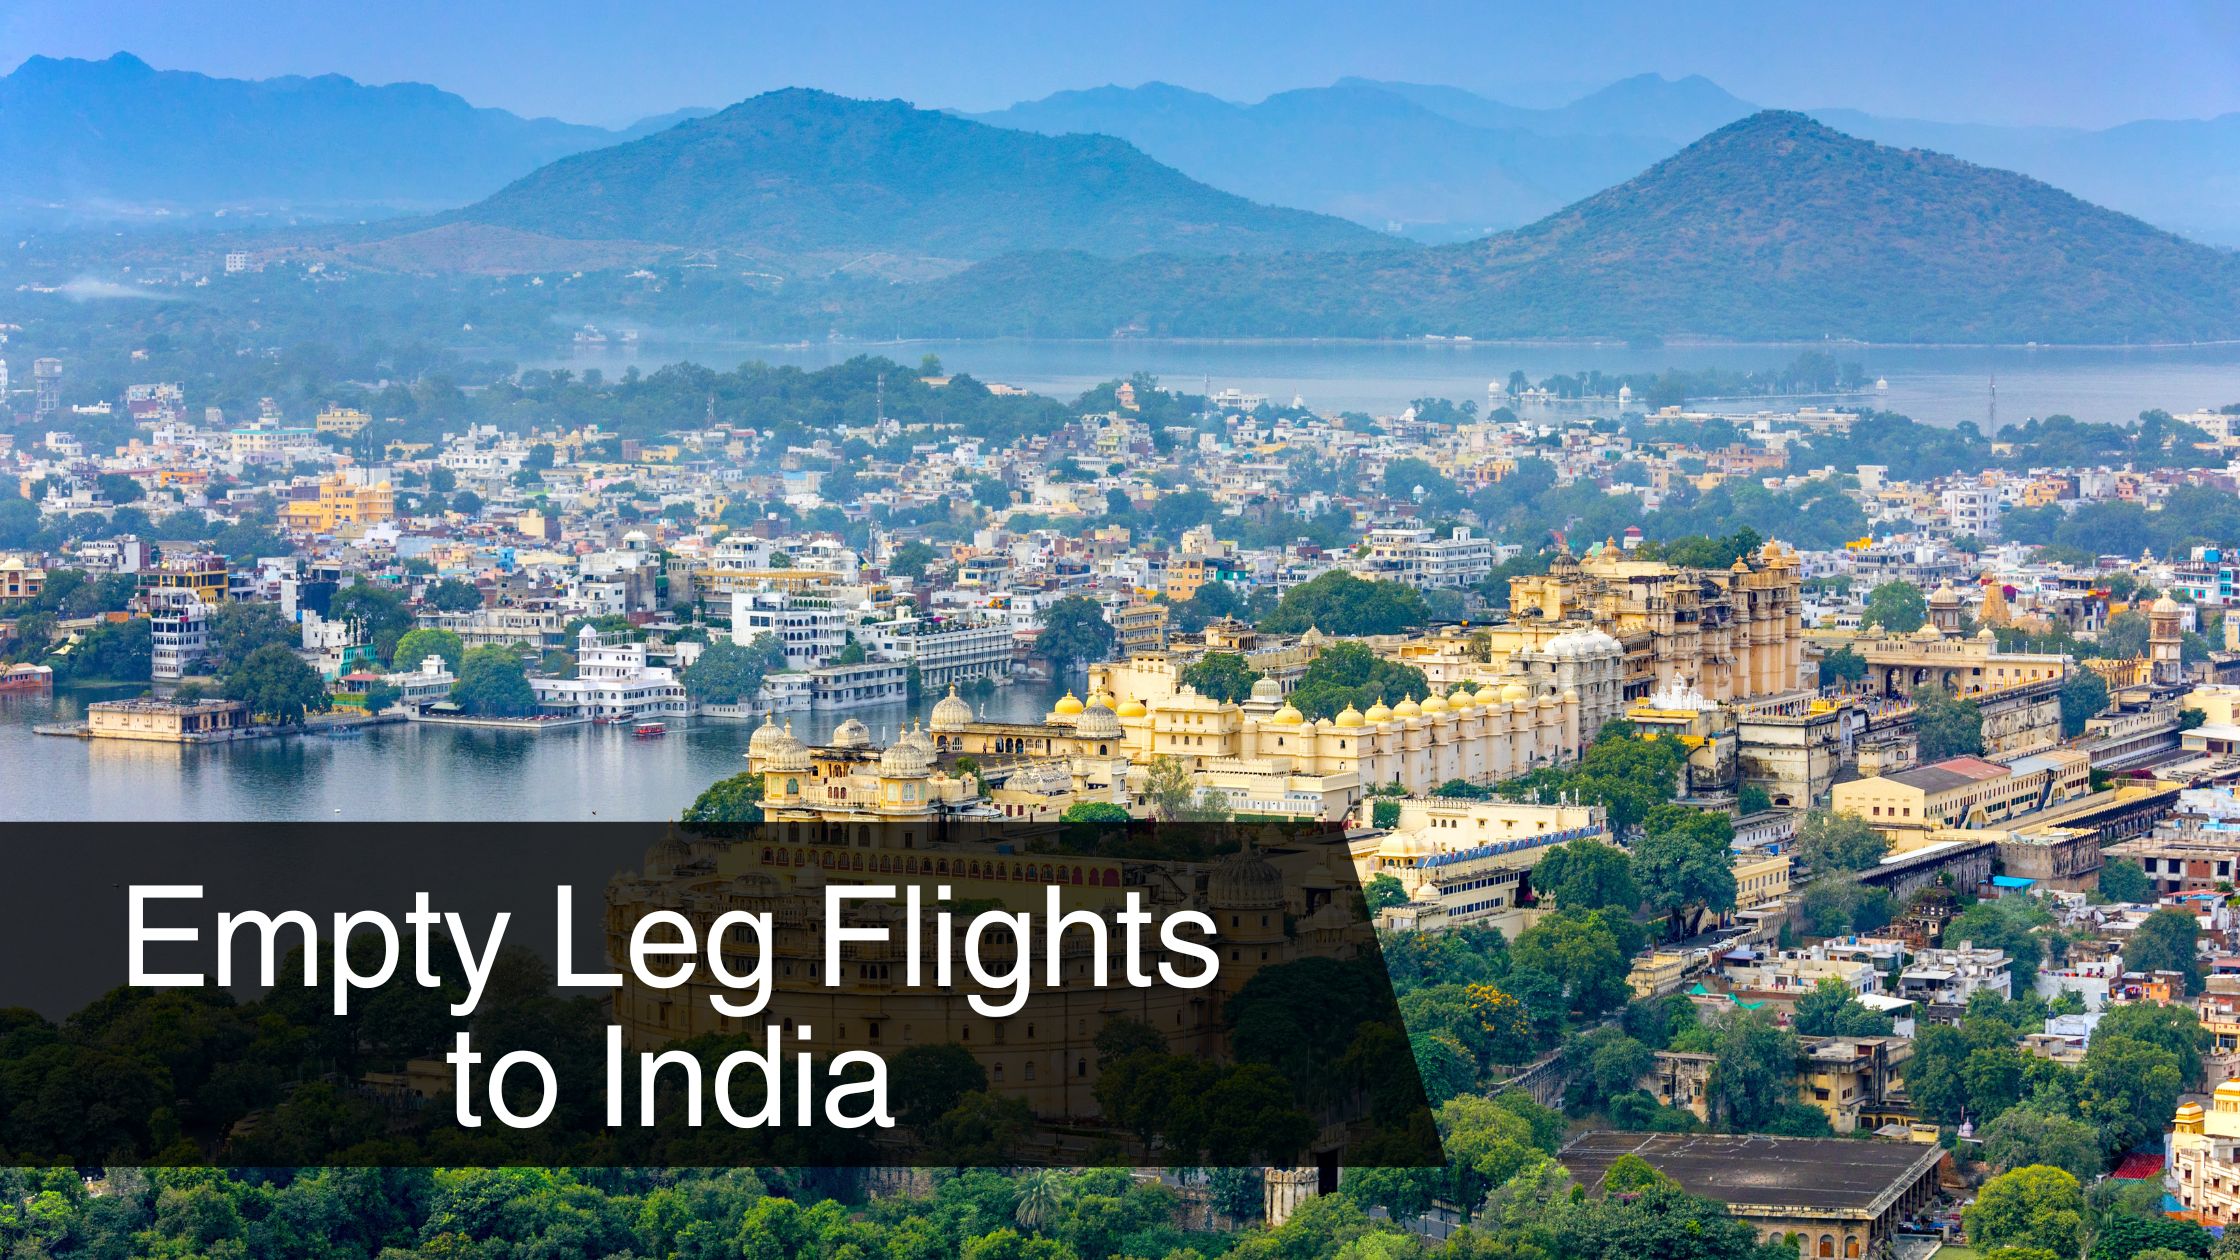 Empty Leg Flights to India